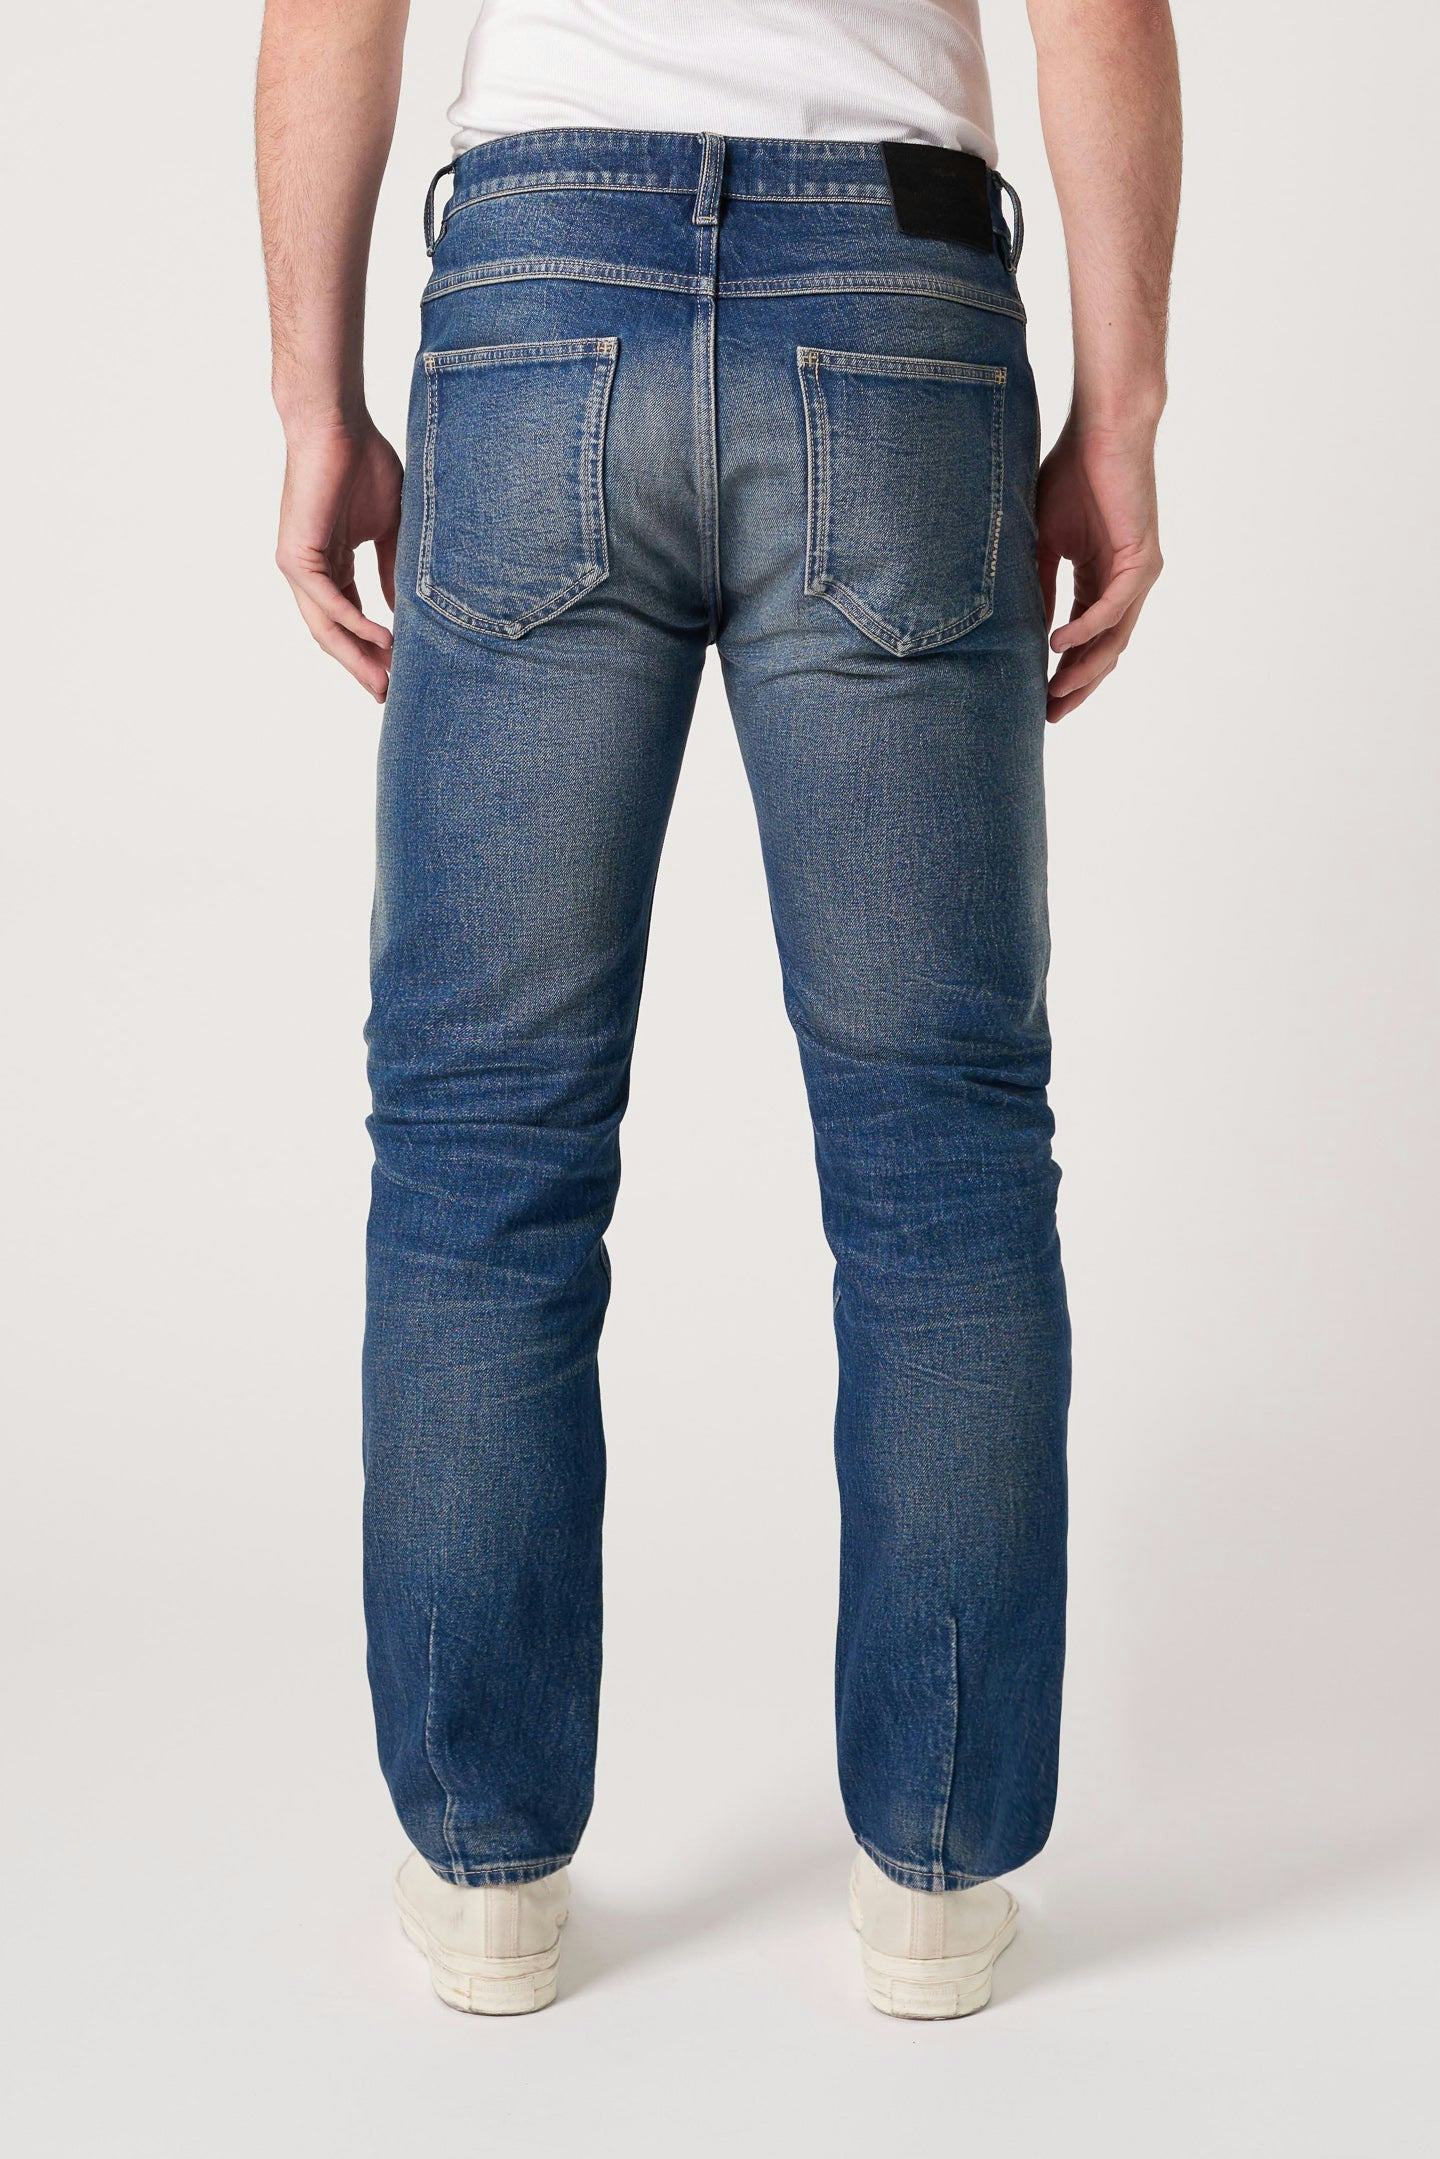 Ray Straight - Montage Neuw mid darkblue mens-jeans 